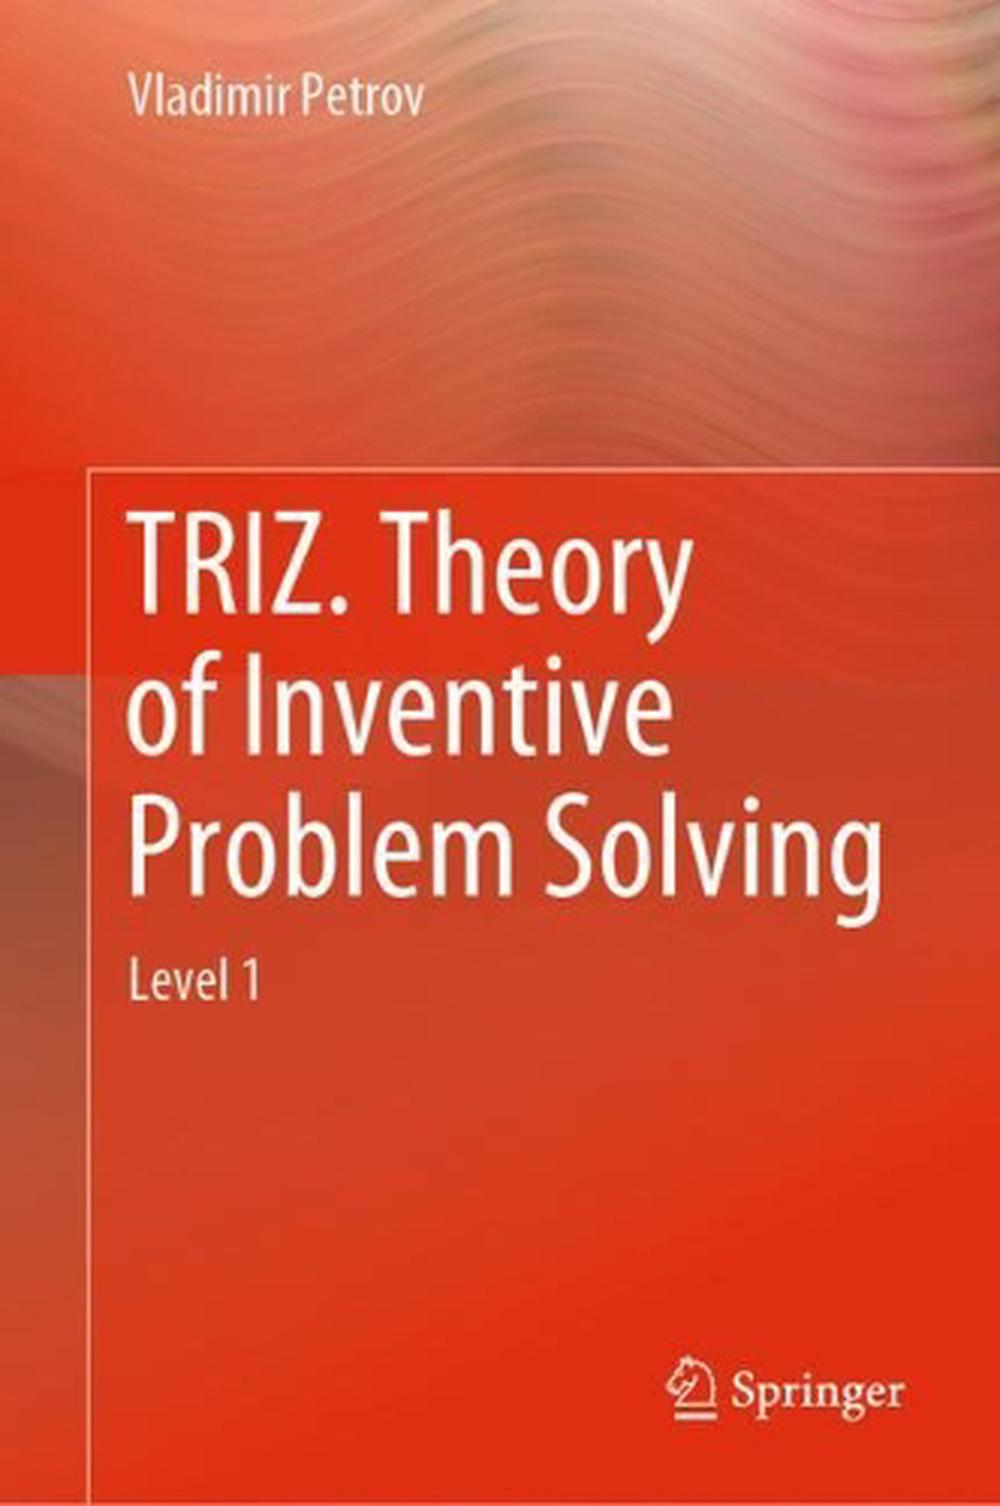 triz problem solving book